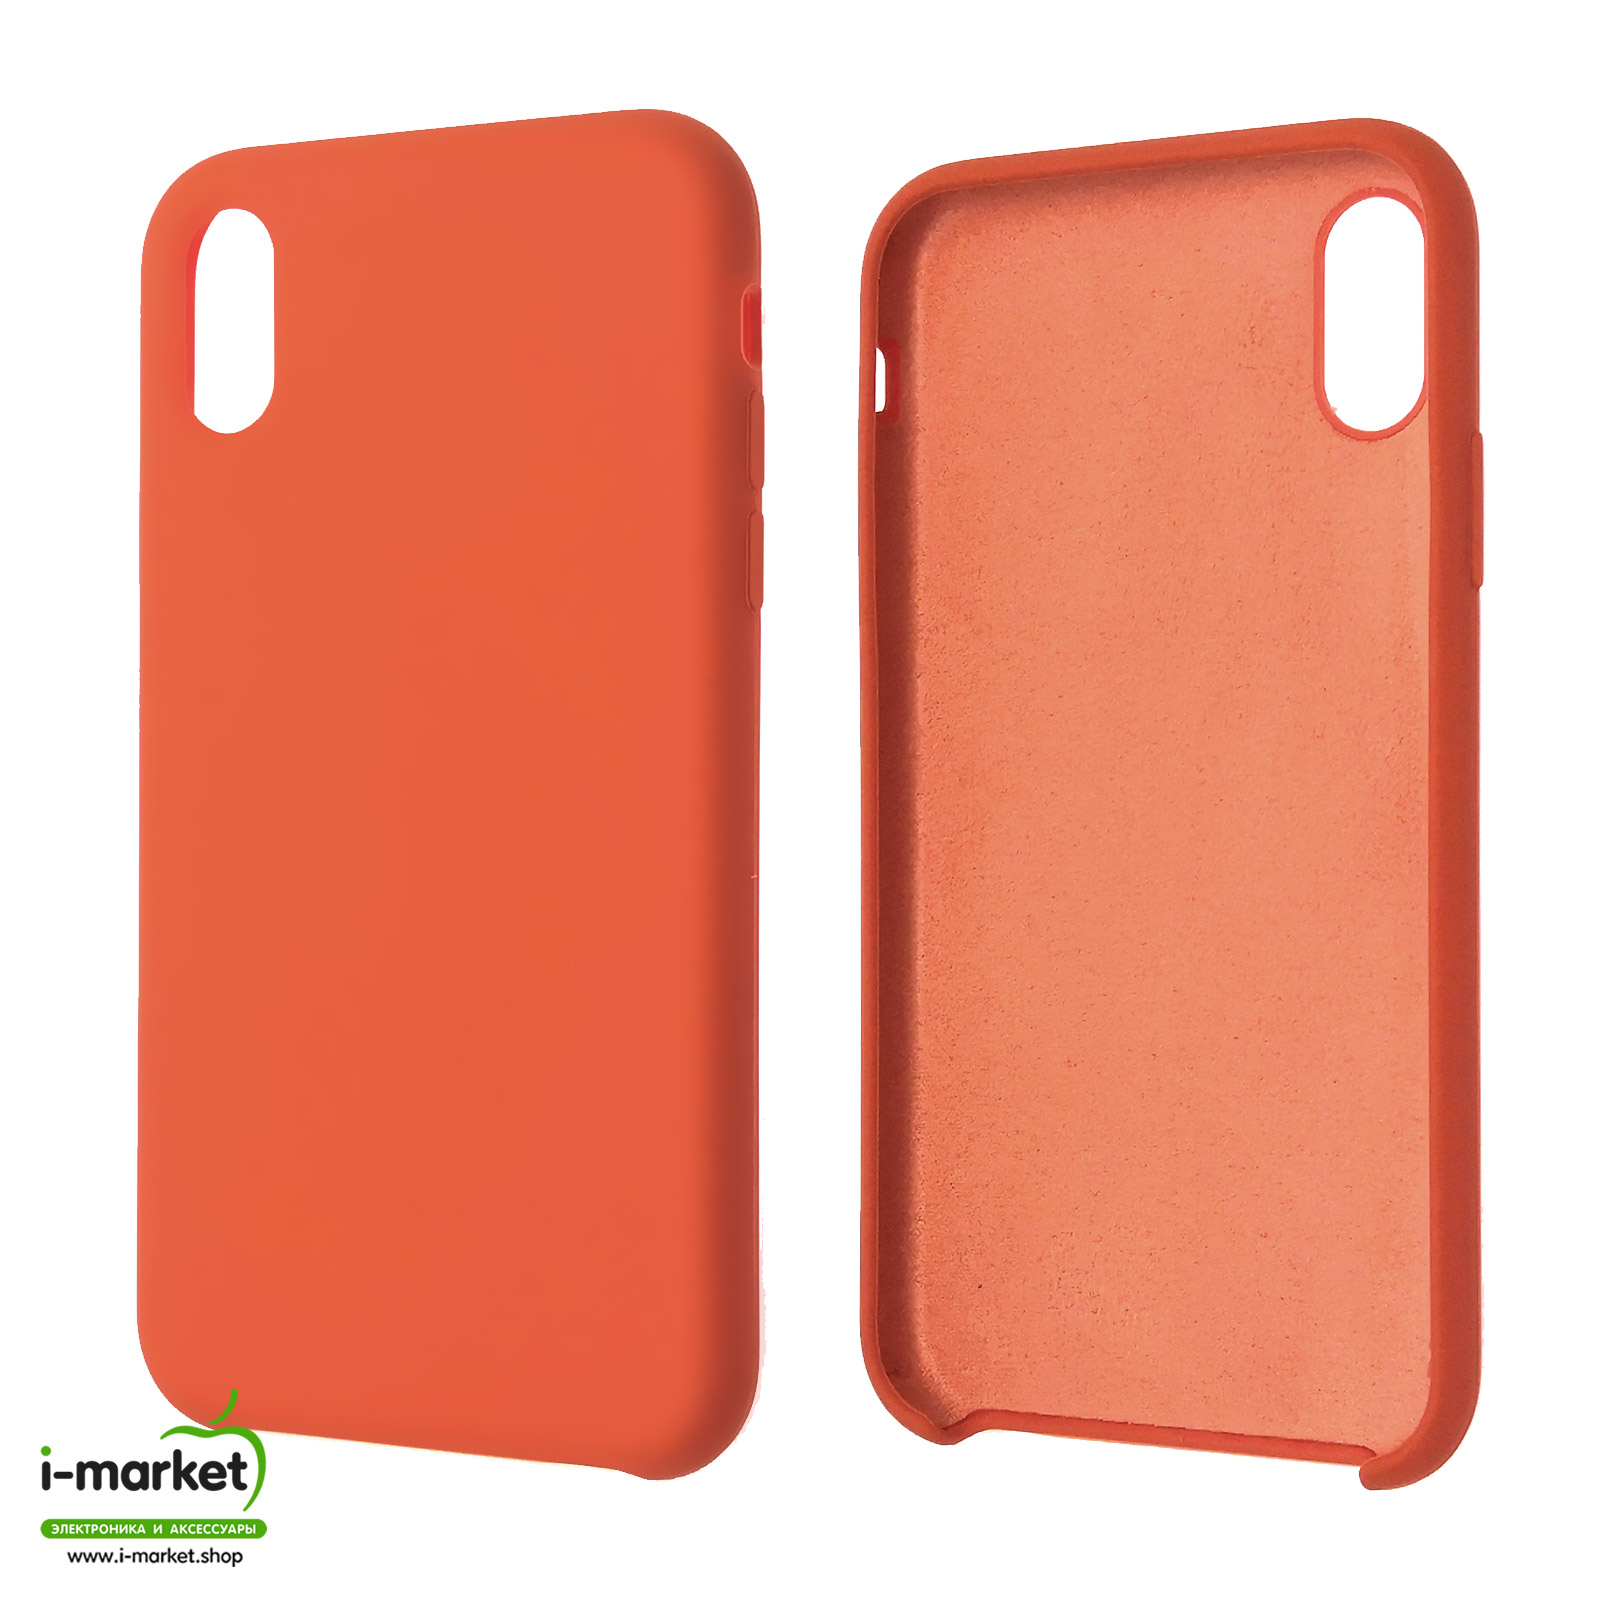 Чехол накладка Silicon Case для APPLE iPhone XR, силикон, бархат, цвет темно оранжевый.